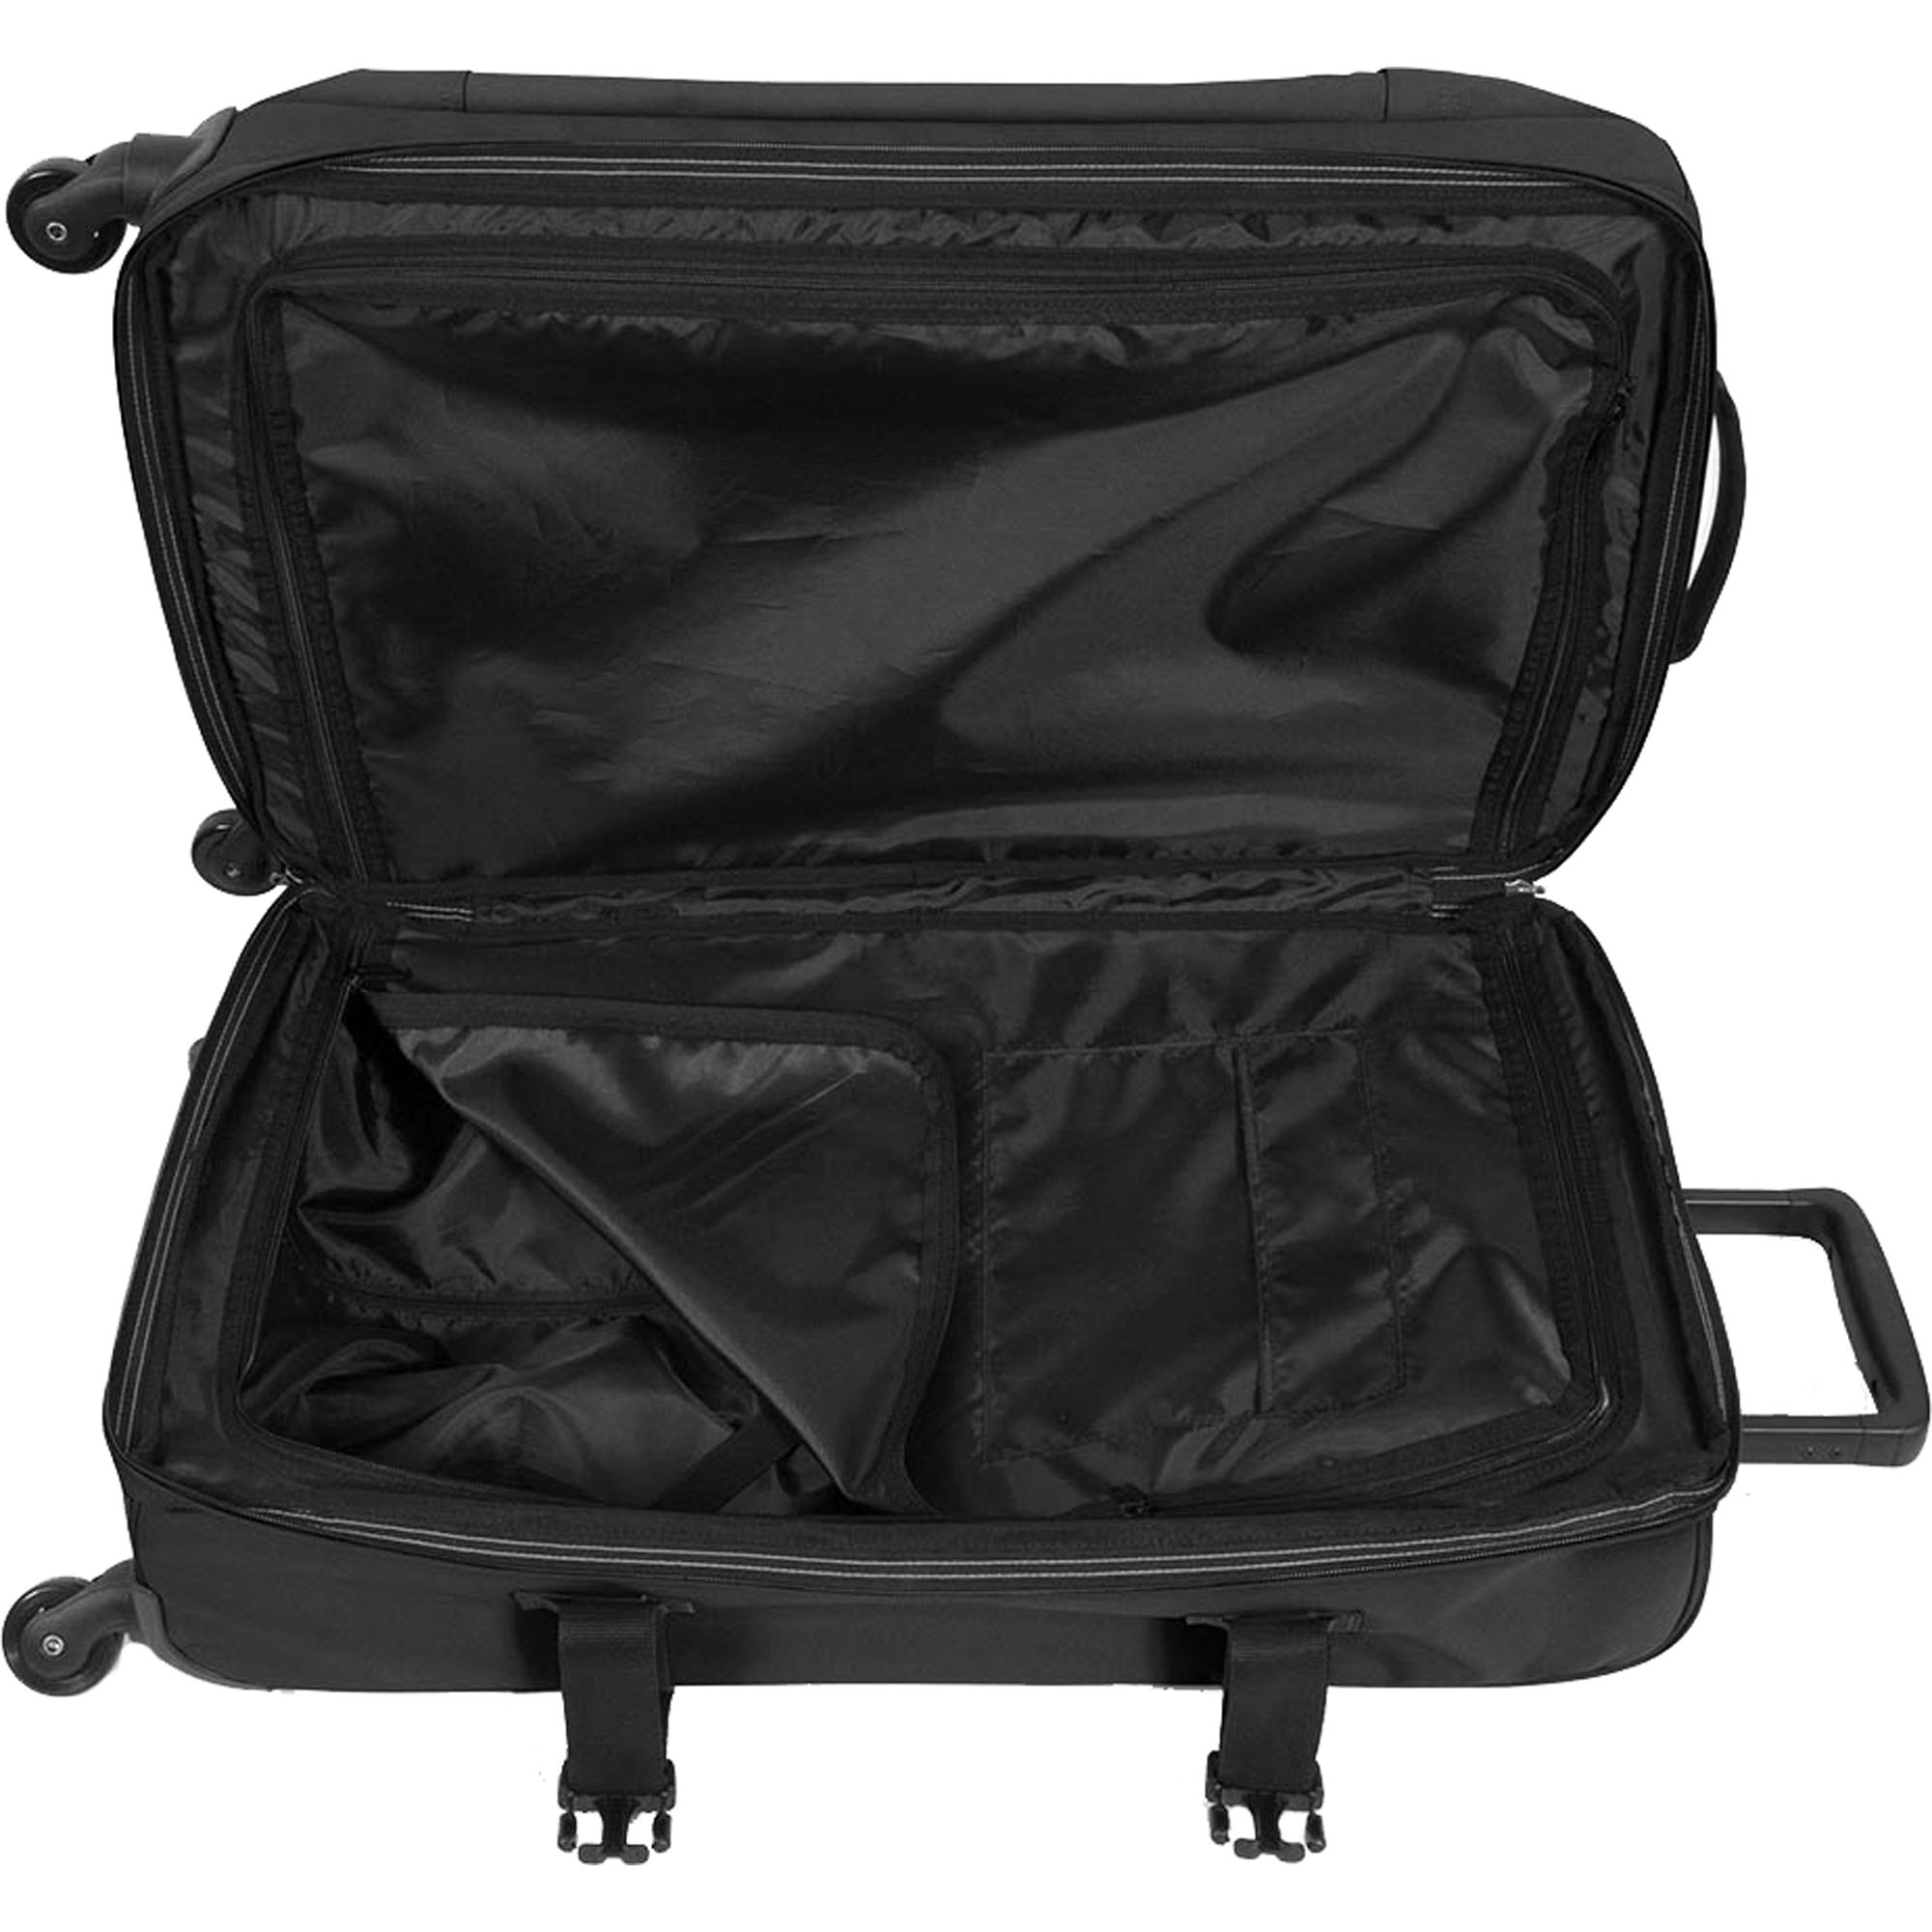 Eastpak Trans4 S 44 Wheeled Bag/Suitcase